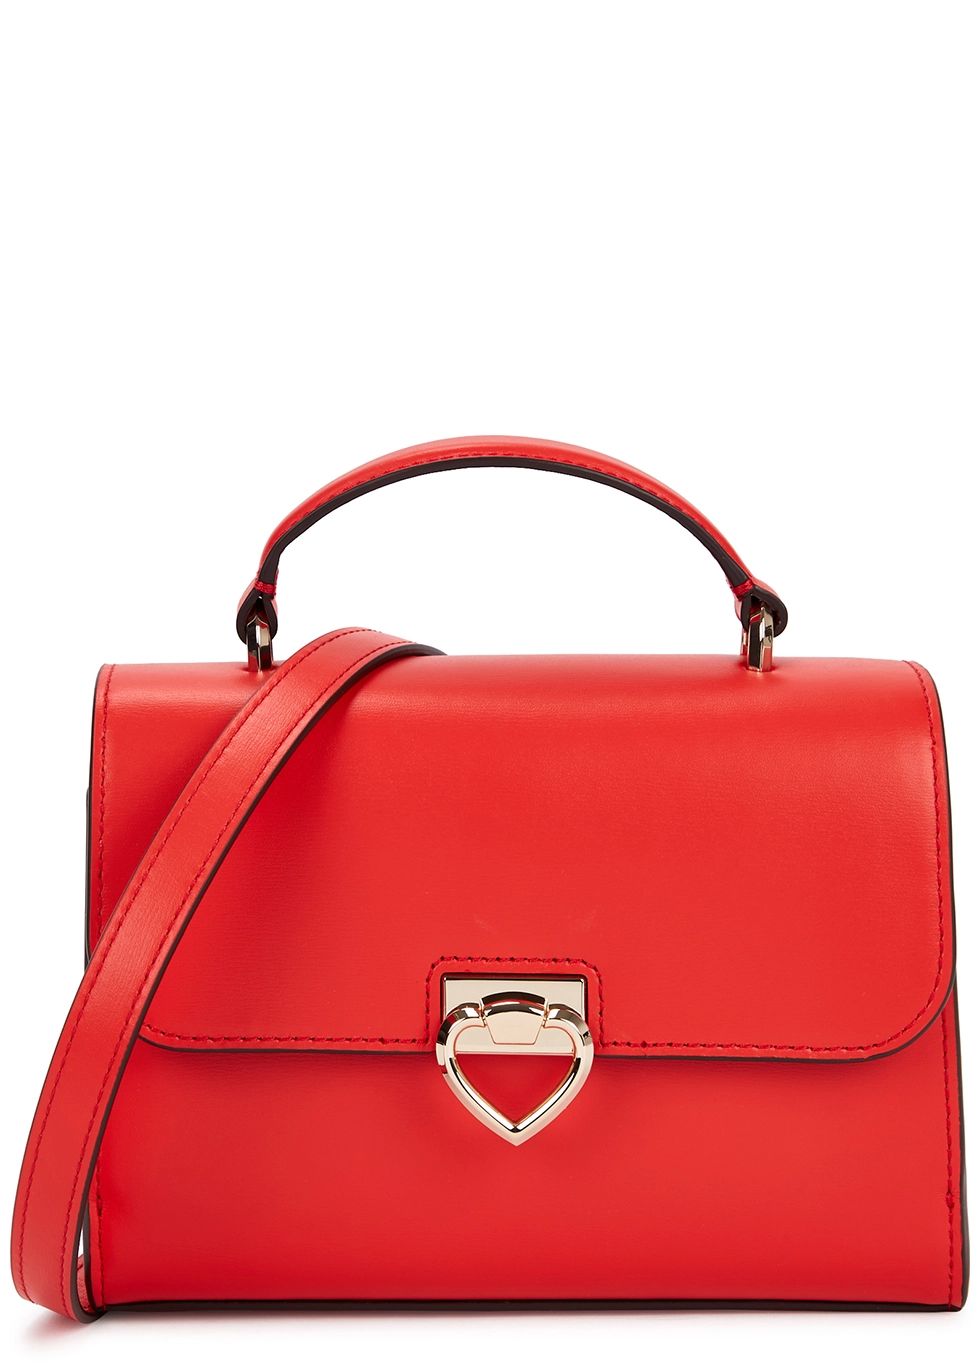 Lovt red leather top handle bag | Harvey Nichols US